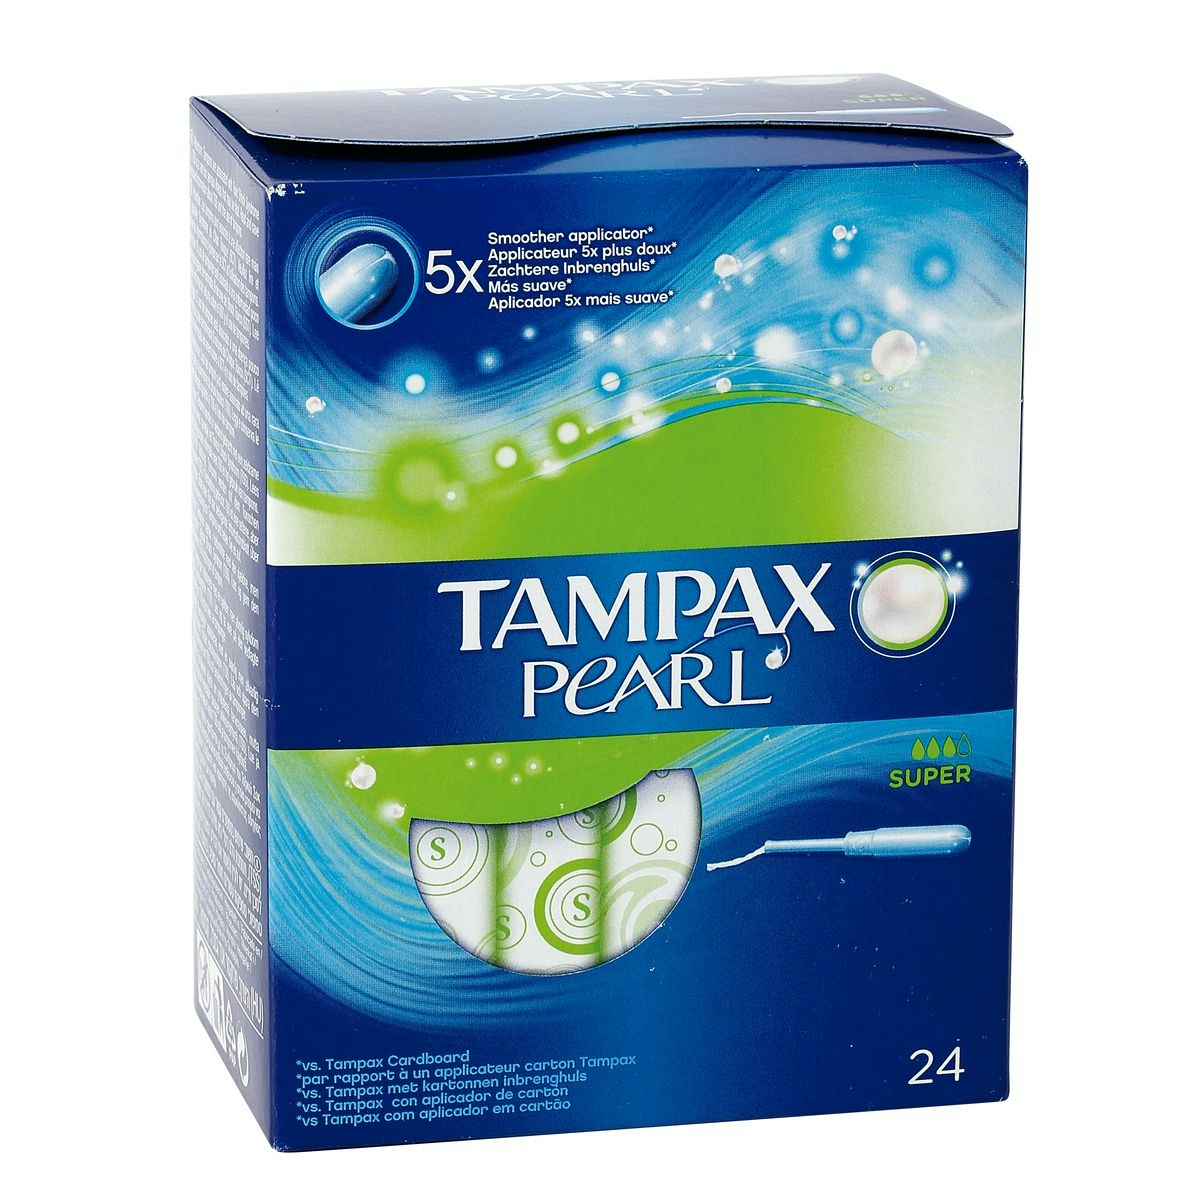 Tampón super TAMPAX Pearl caja 24 uds